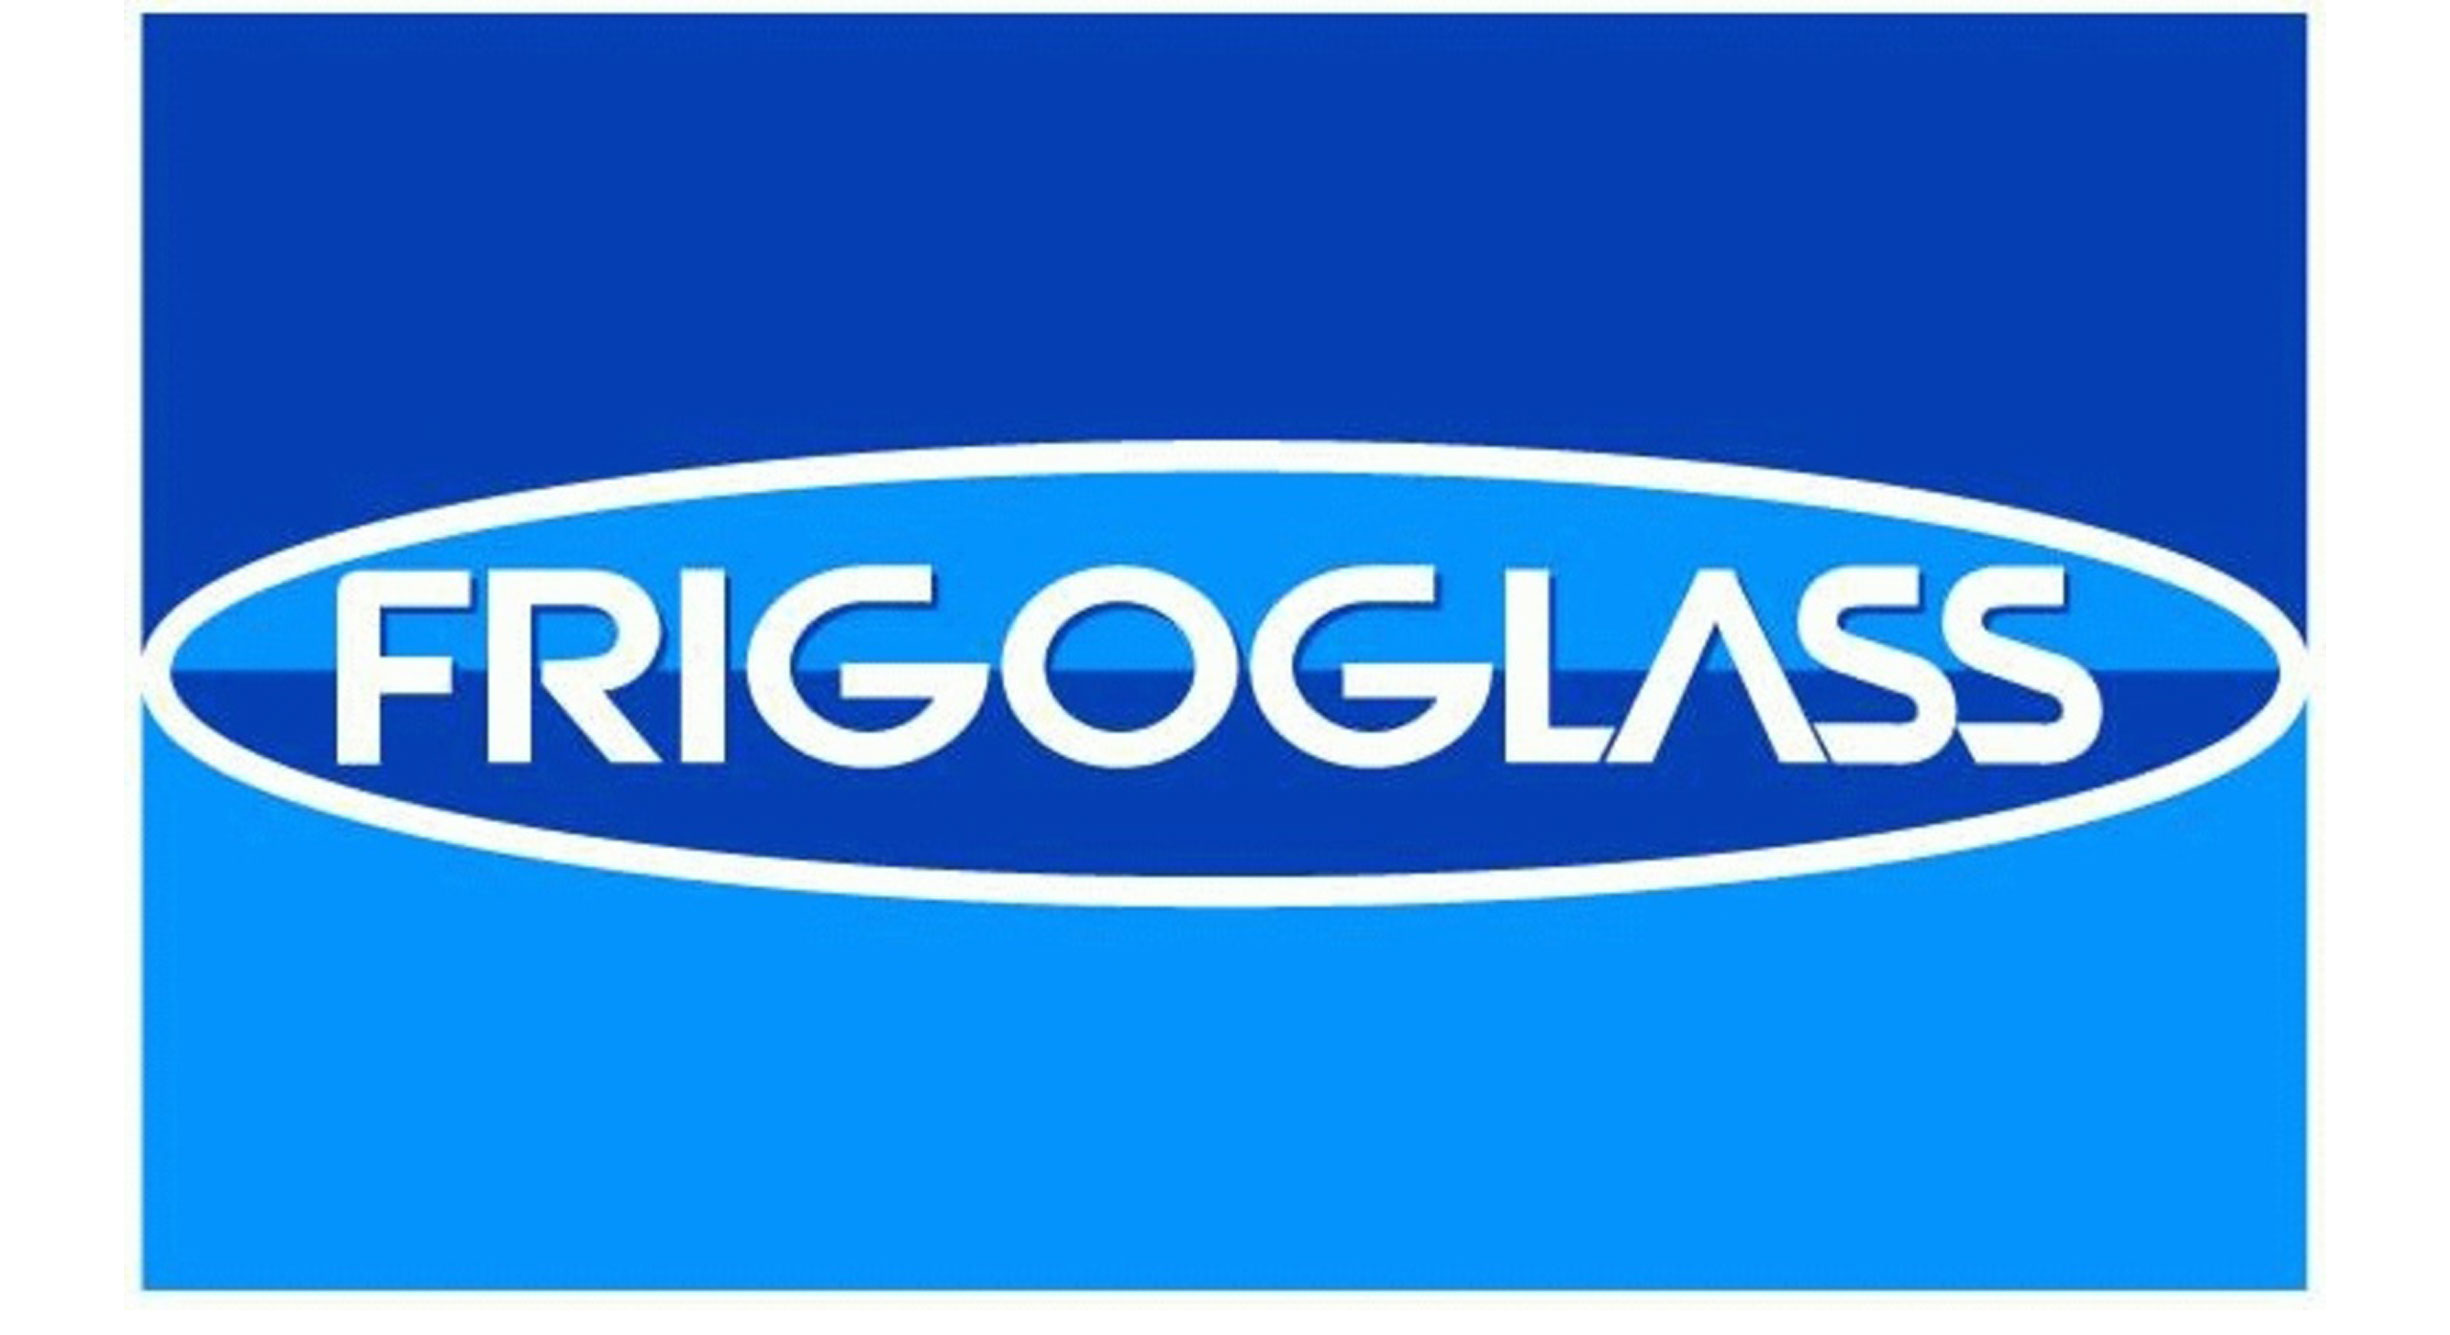 Frigoglass: Μειώθηκαν οι πωλήσεις σε επαγγελματικά ψυγεία λόγω κορονοϊού, αλλά αυξήθηκαν οι γυάλινες φιάλες